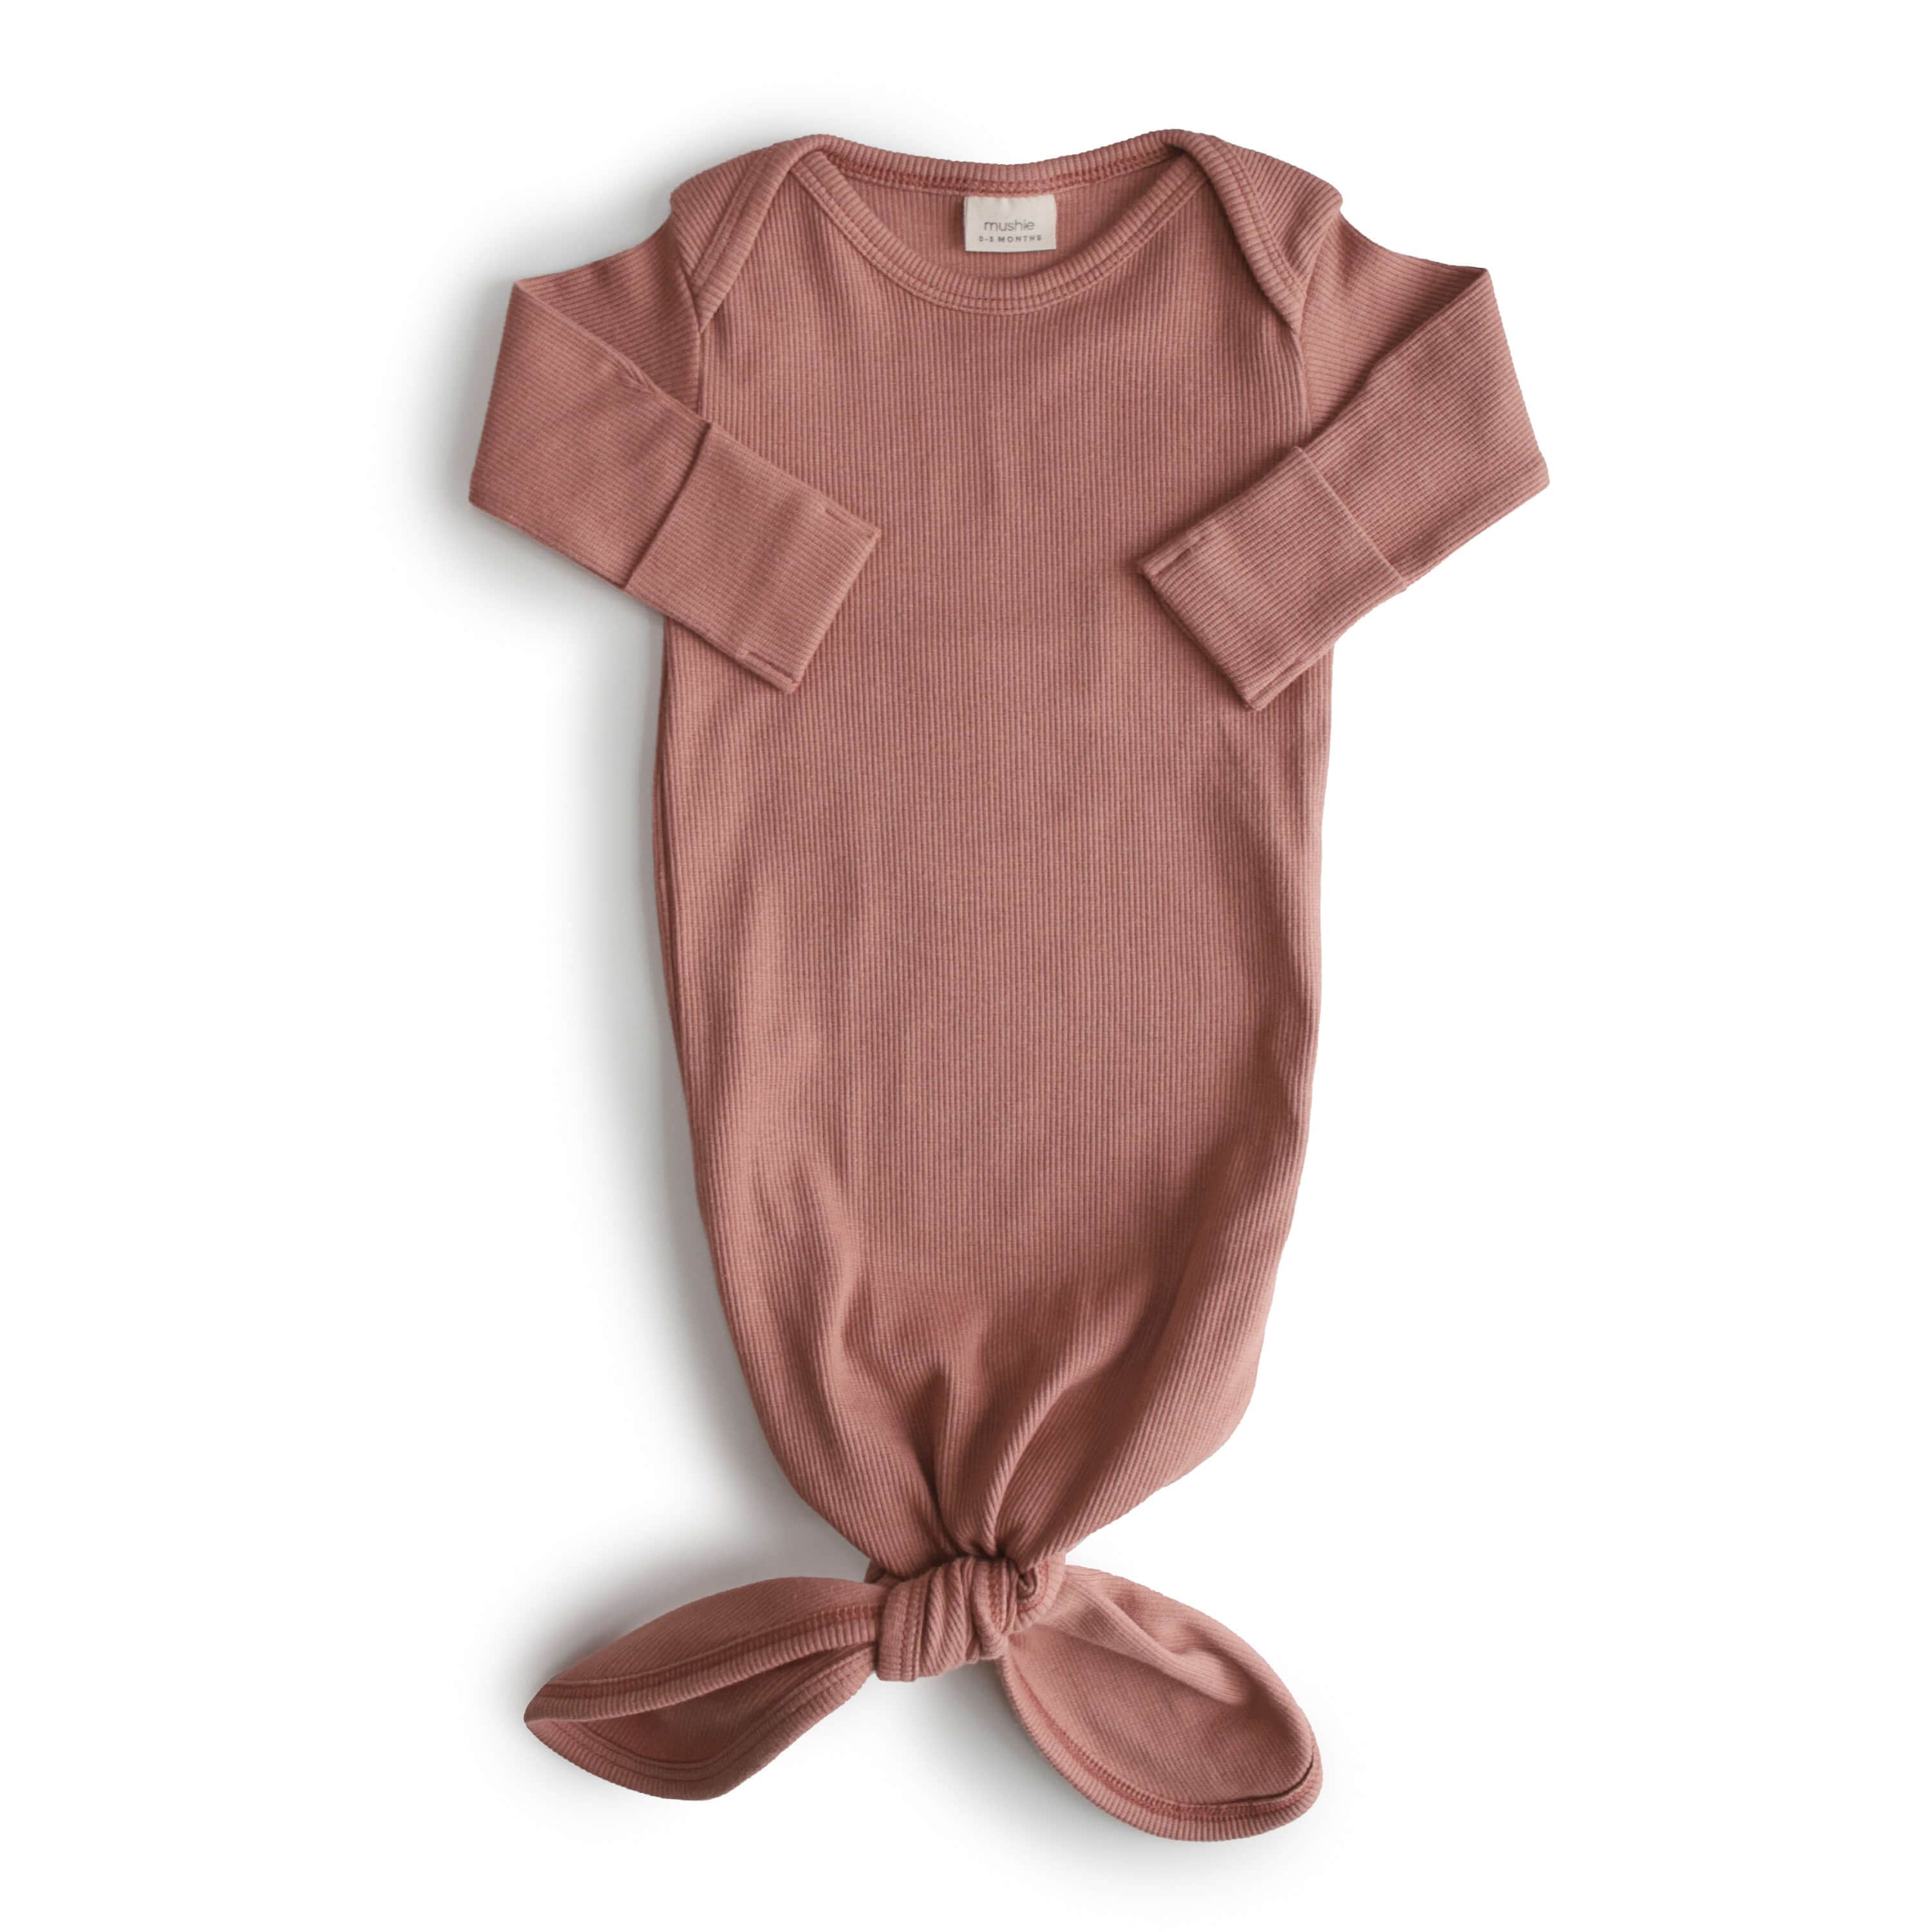 Ribbed baby dress "Cedar